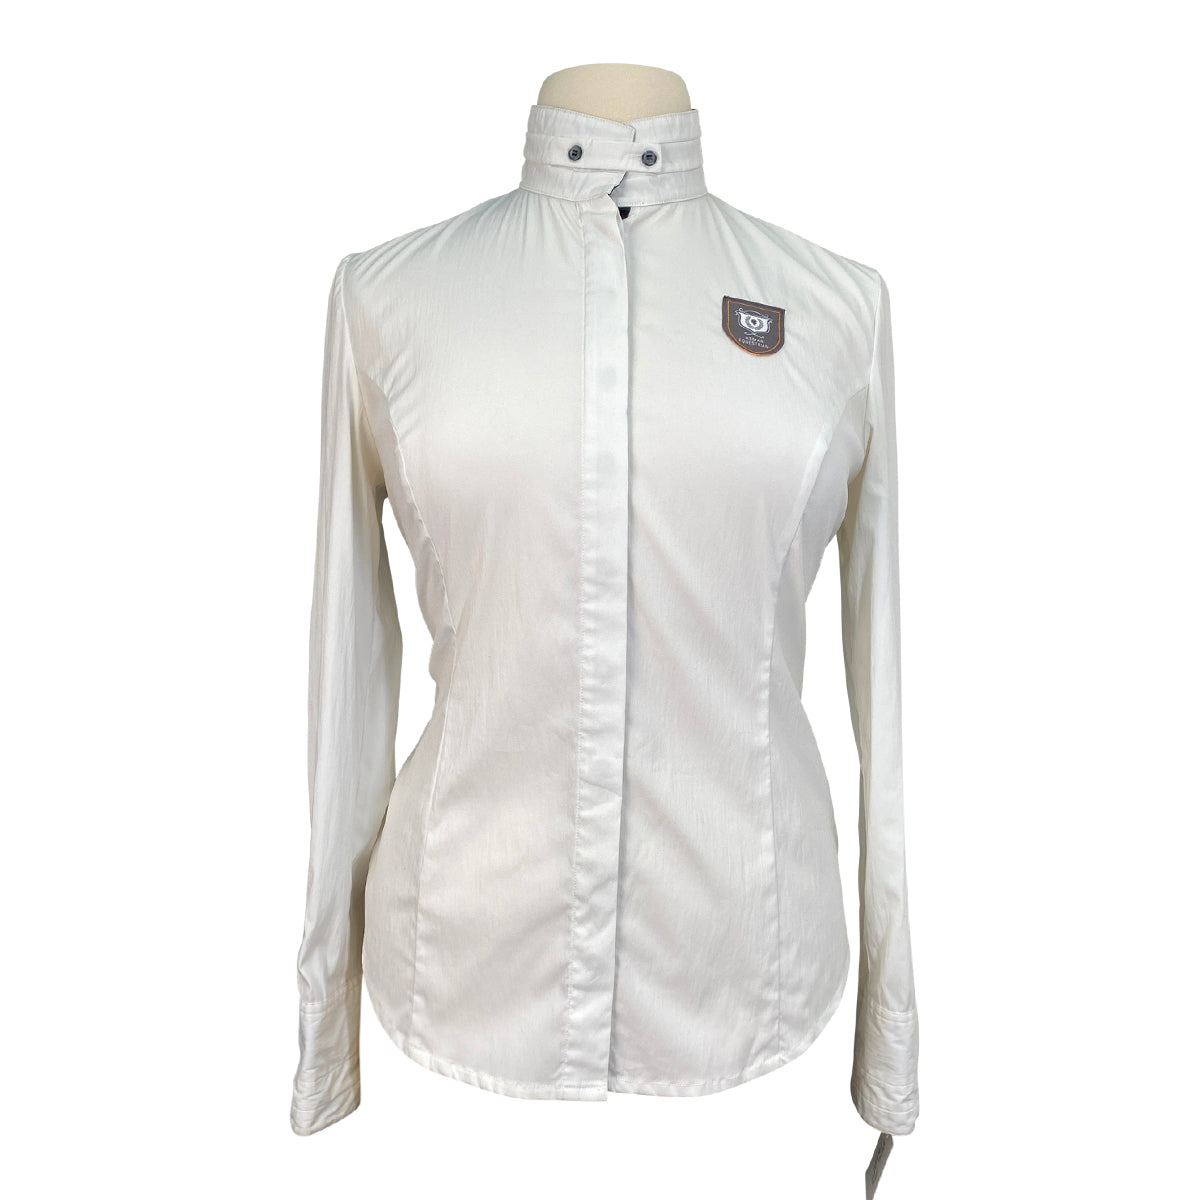 Asmar Equestrian Long Sleeve Show Shirt in White